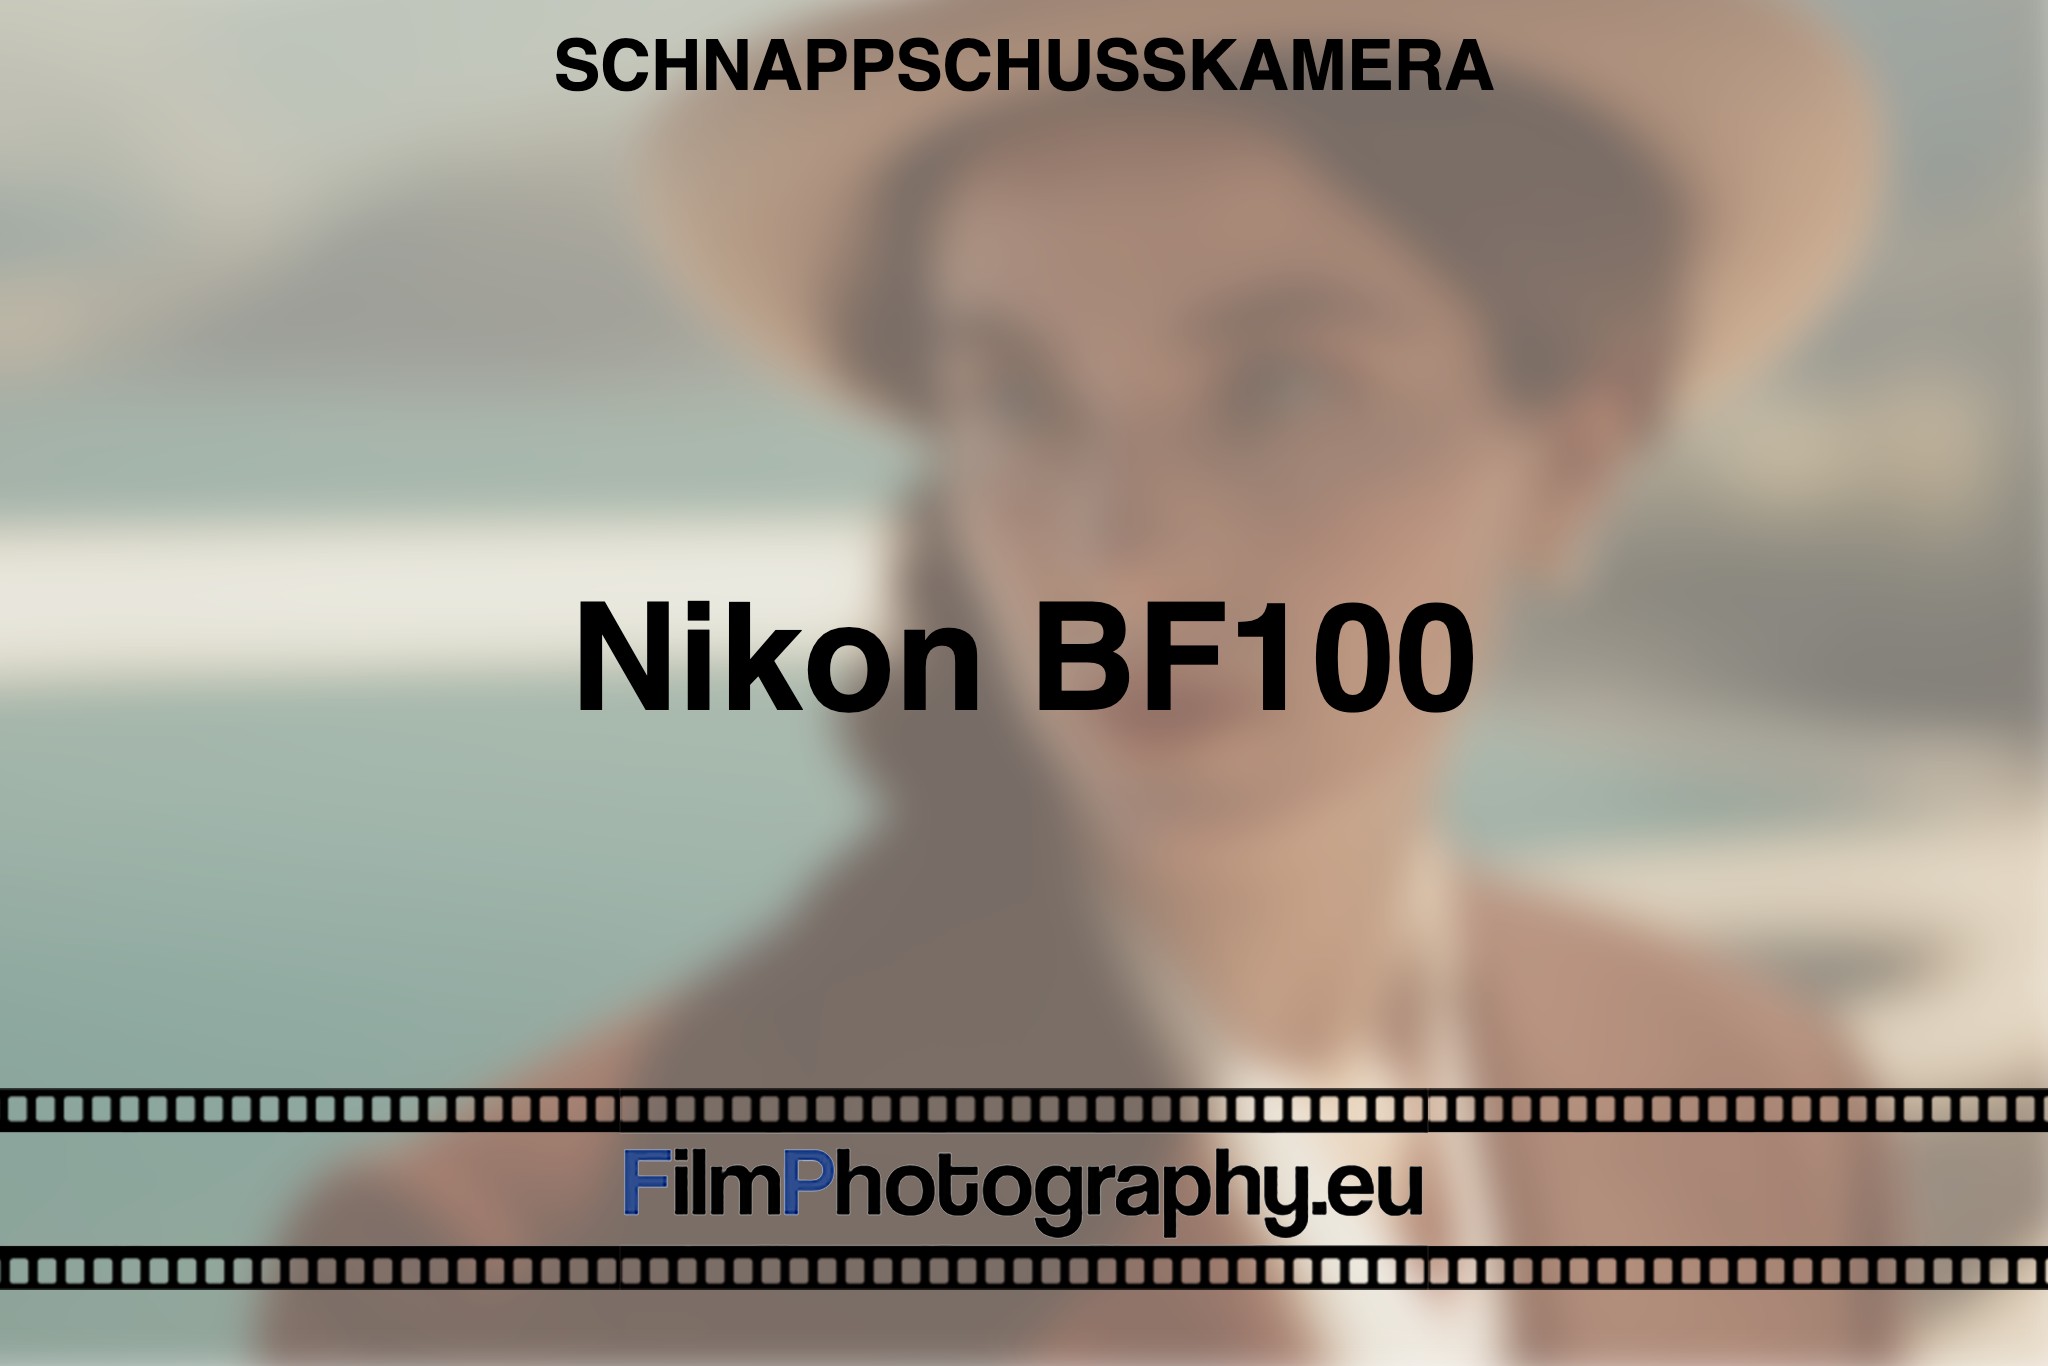 nikon-bf100-schnappschusskamera-bnv